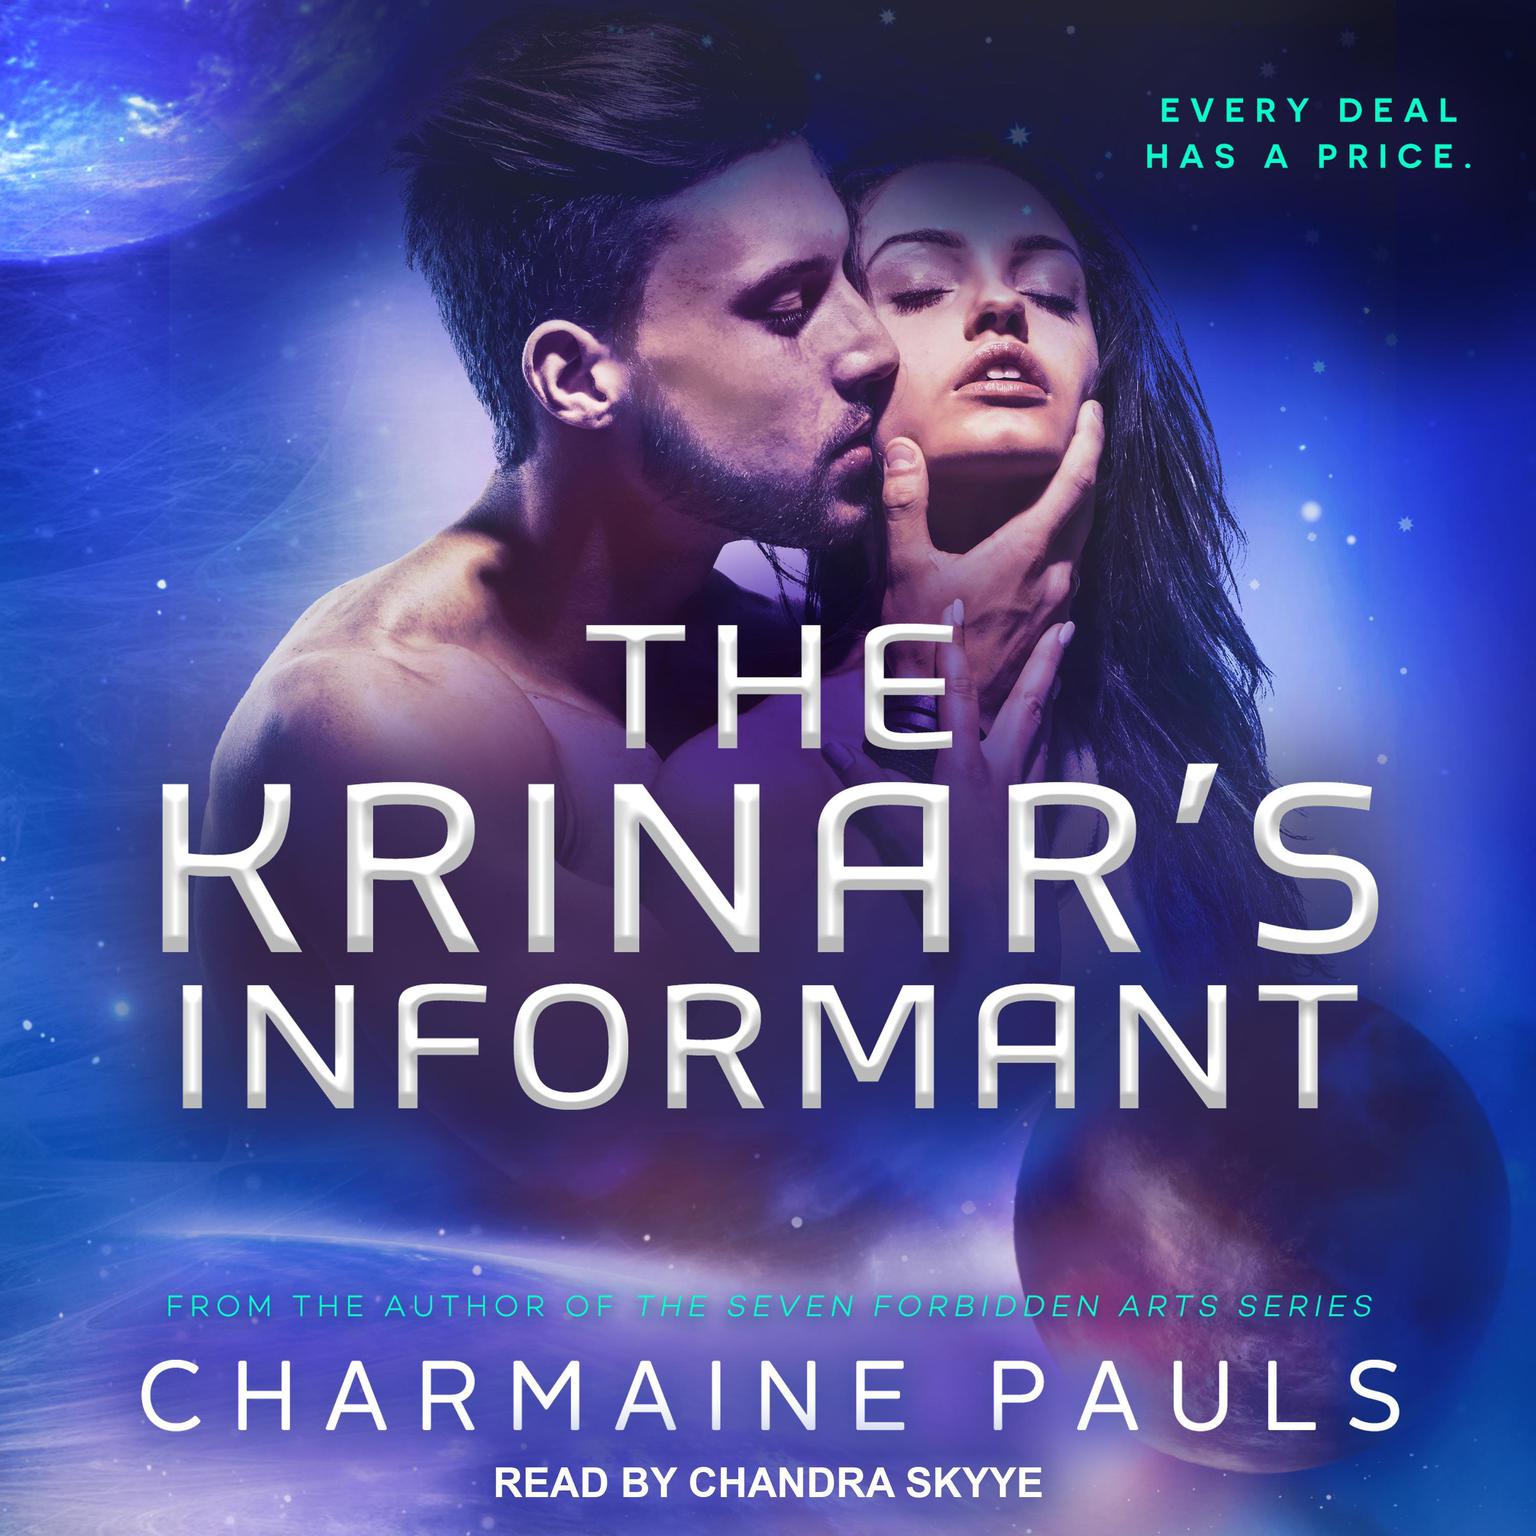 The Krinars Informant: A Krinar World Novel Audiobook, by Charmaine Pauls